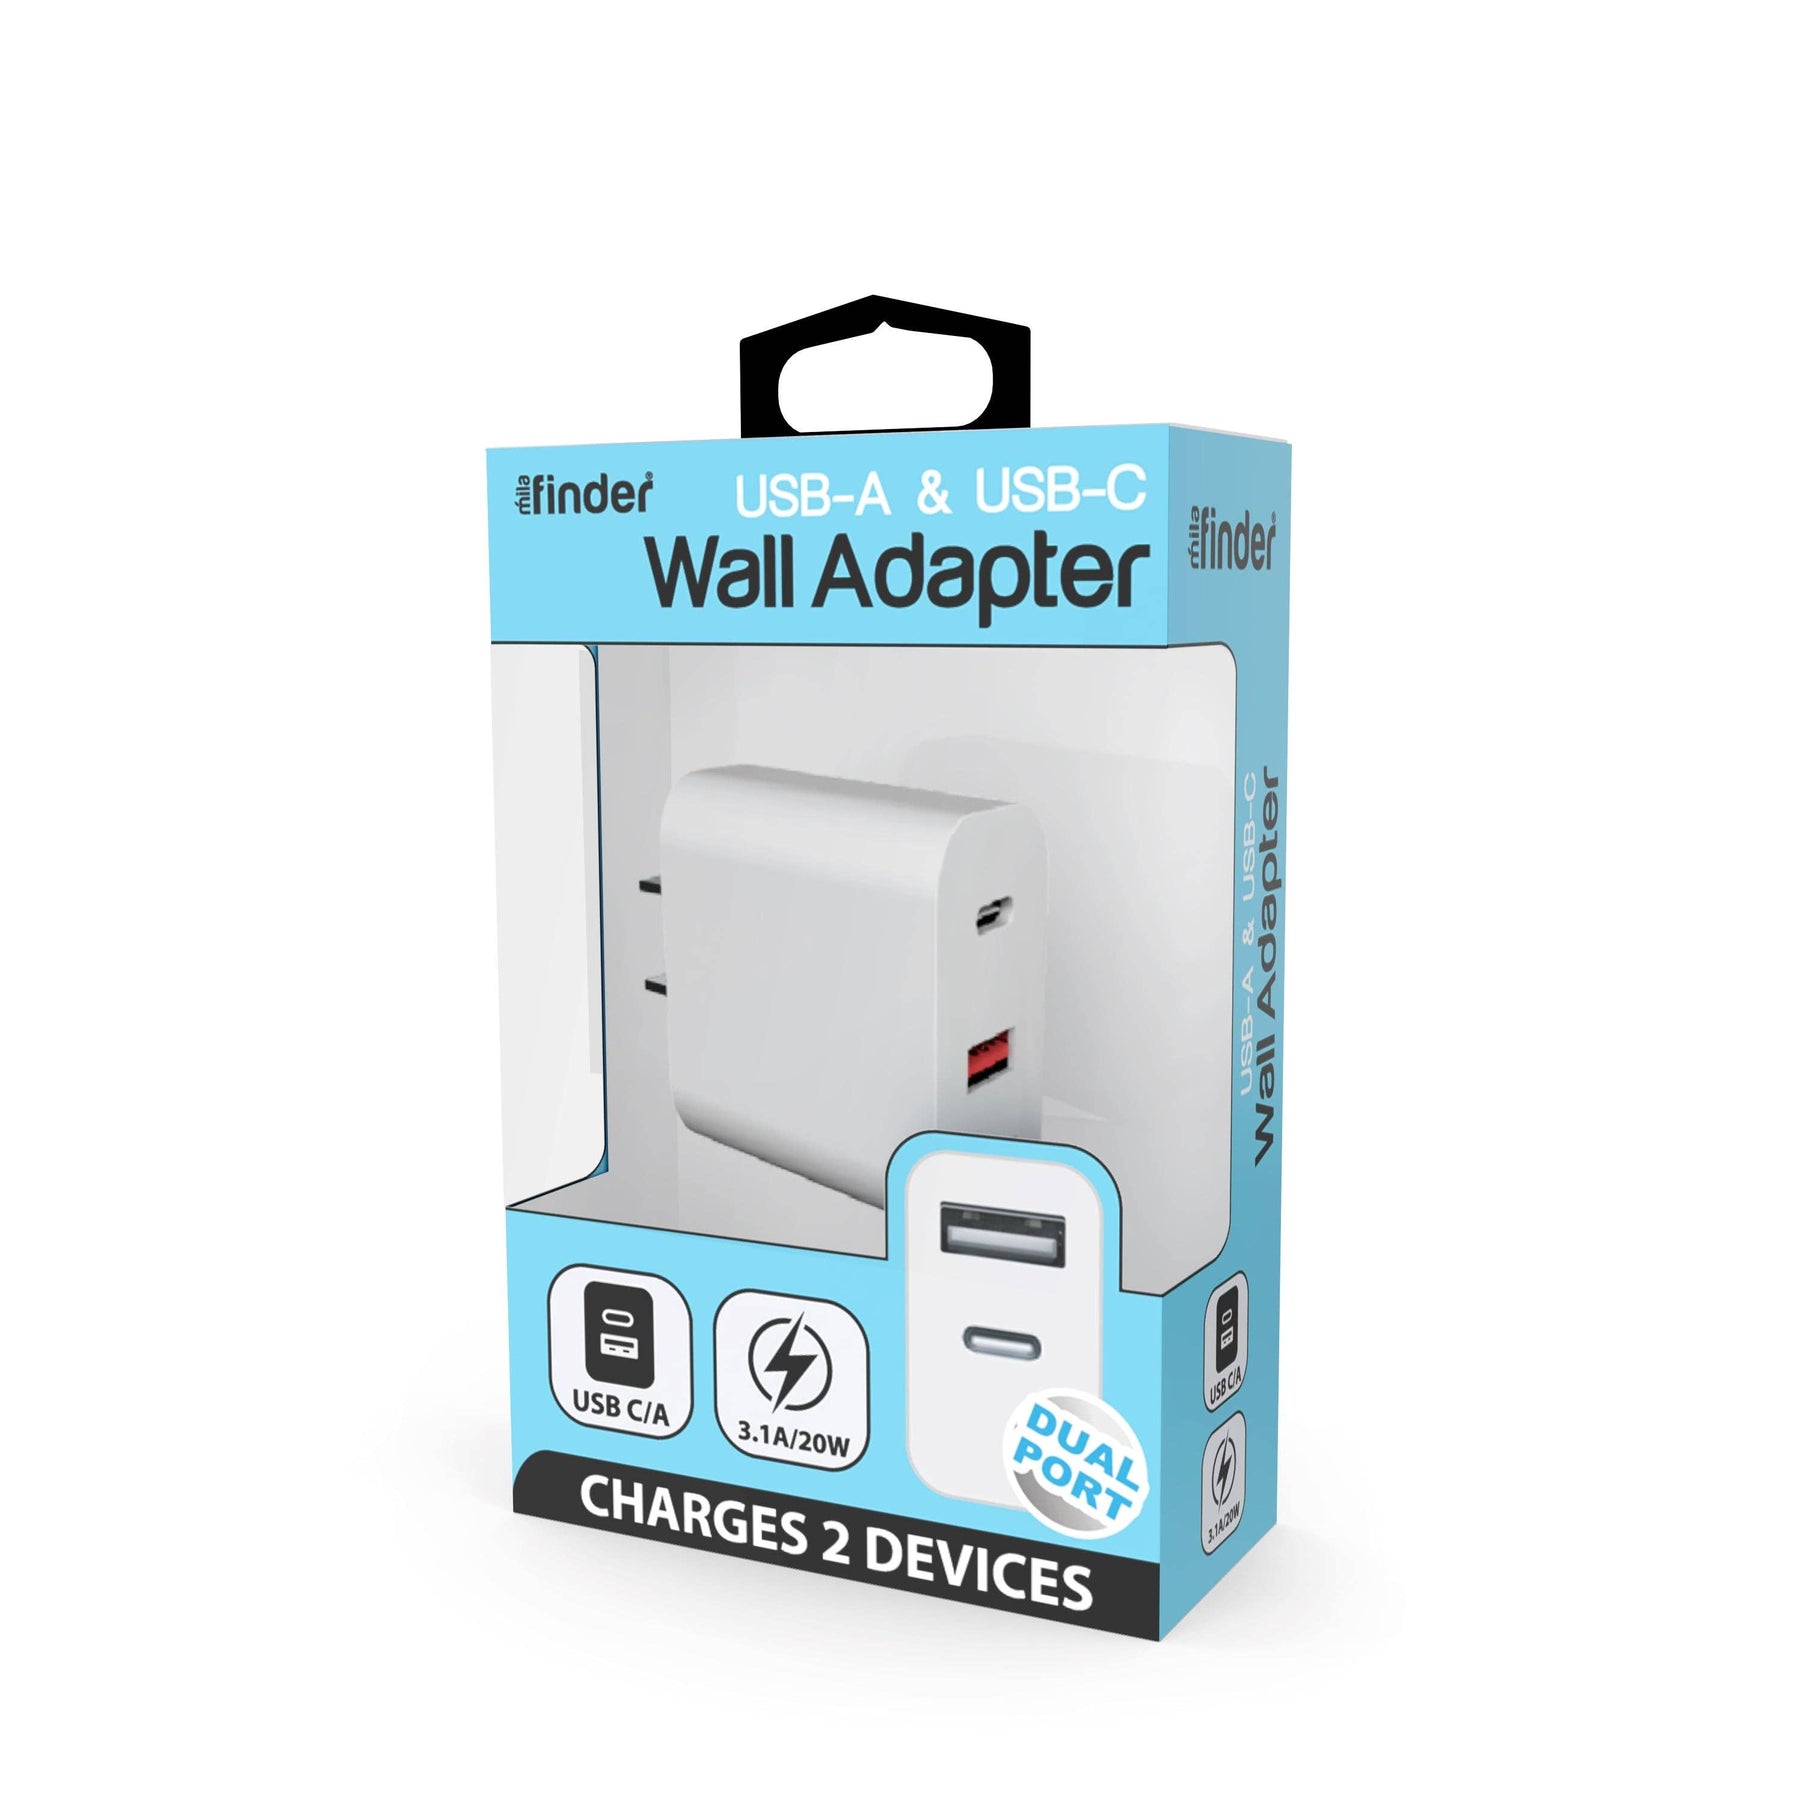 USB C/A Wall Adapter